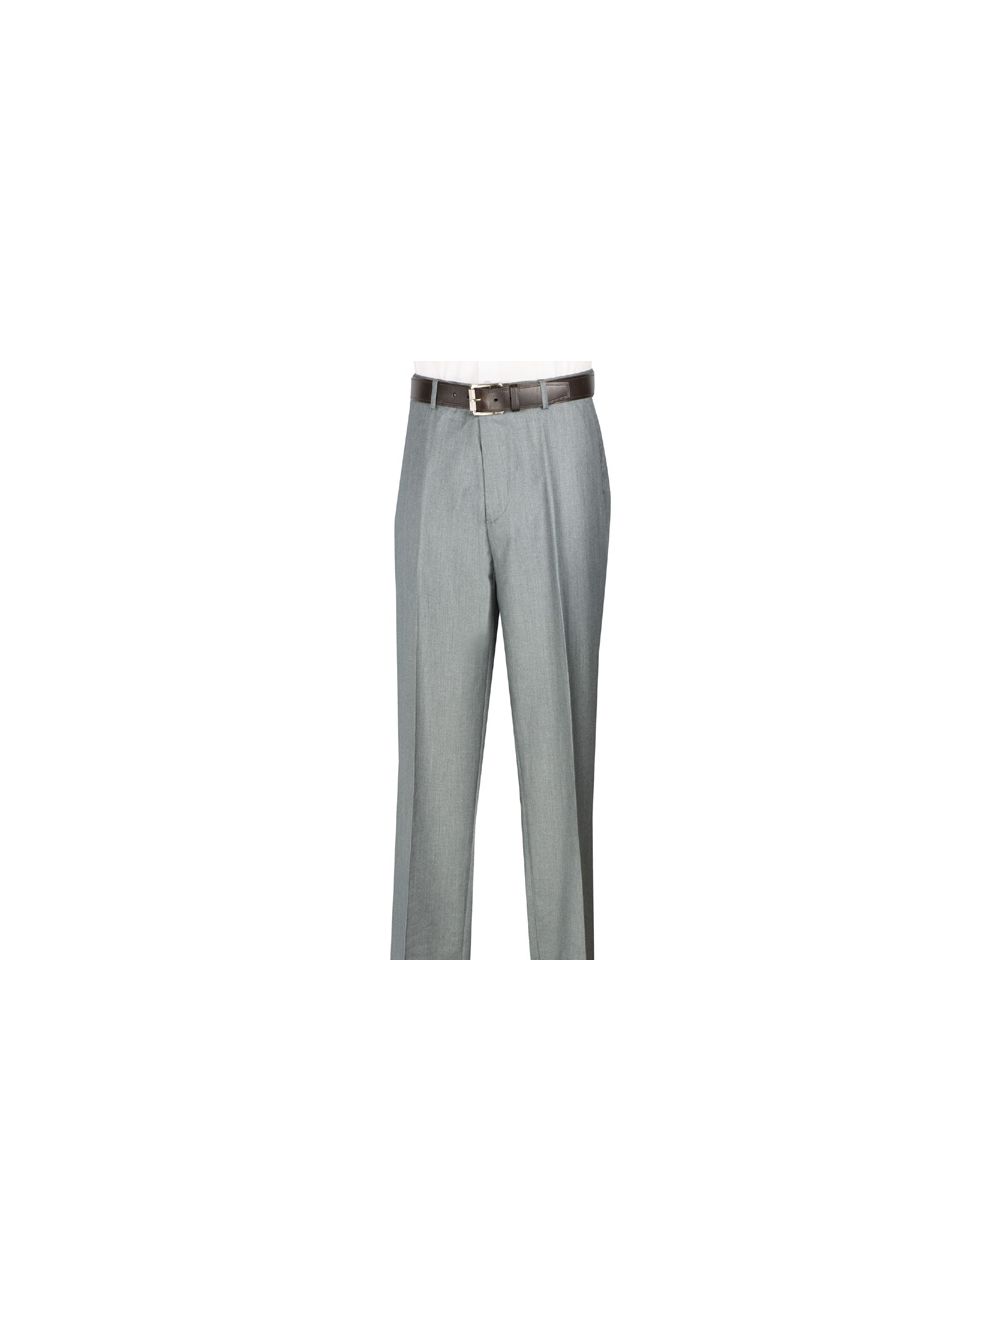 Vinci Flat Front Wool-Feel Dress Pant in Gray (FF-RSG)